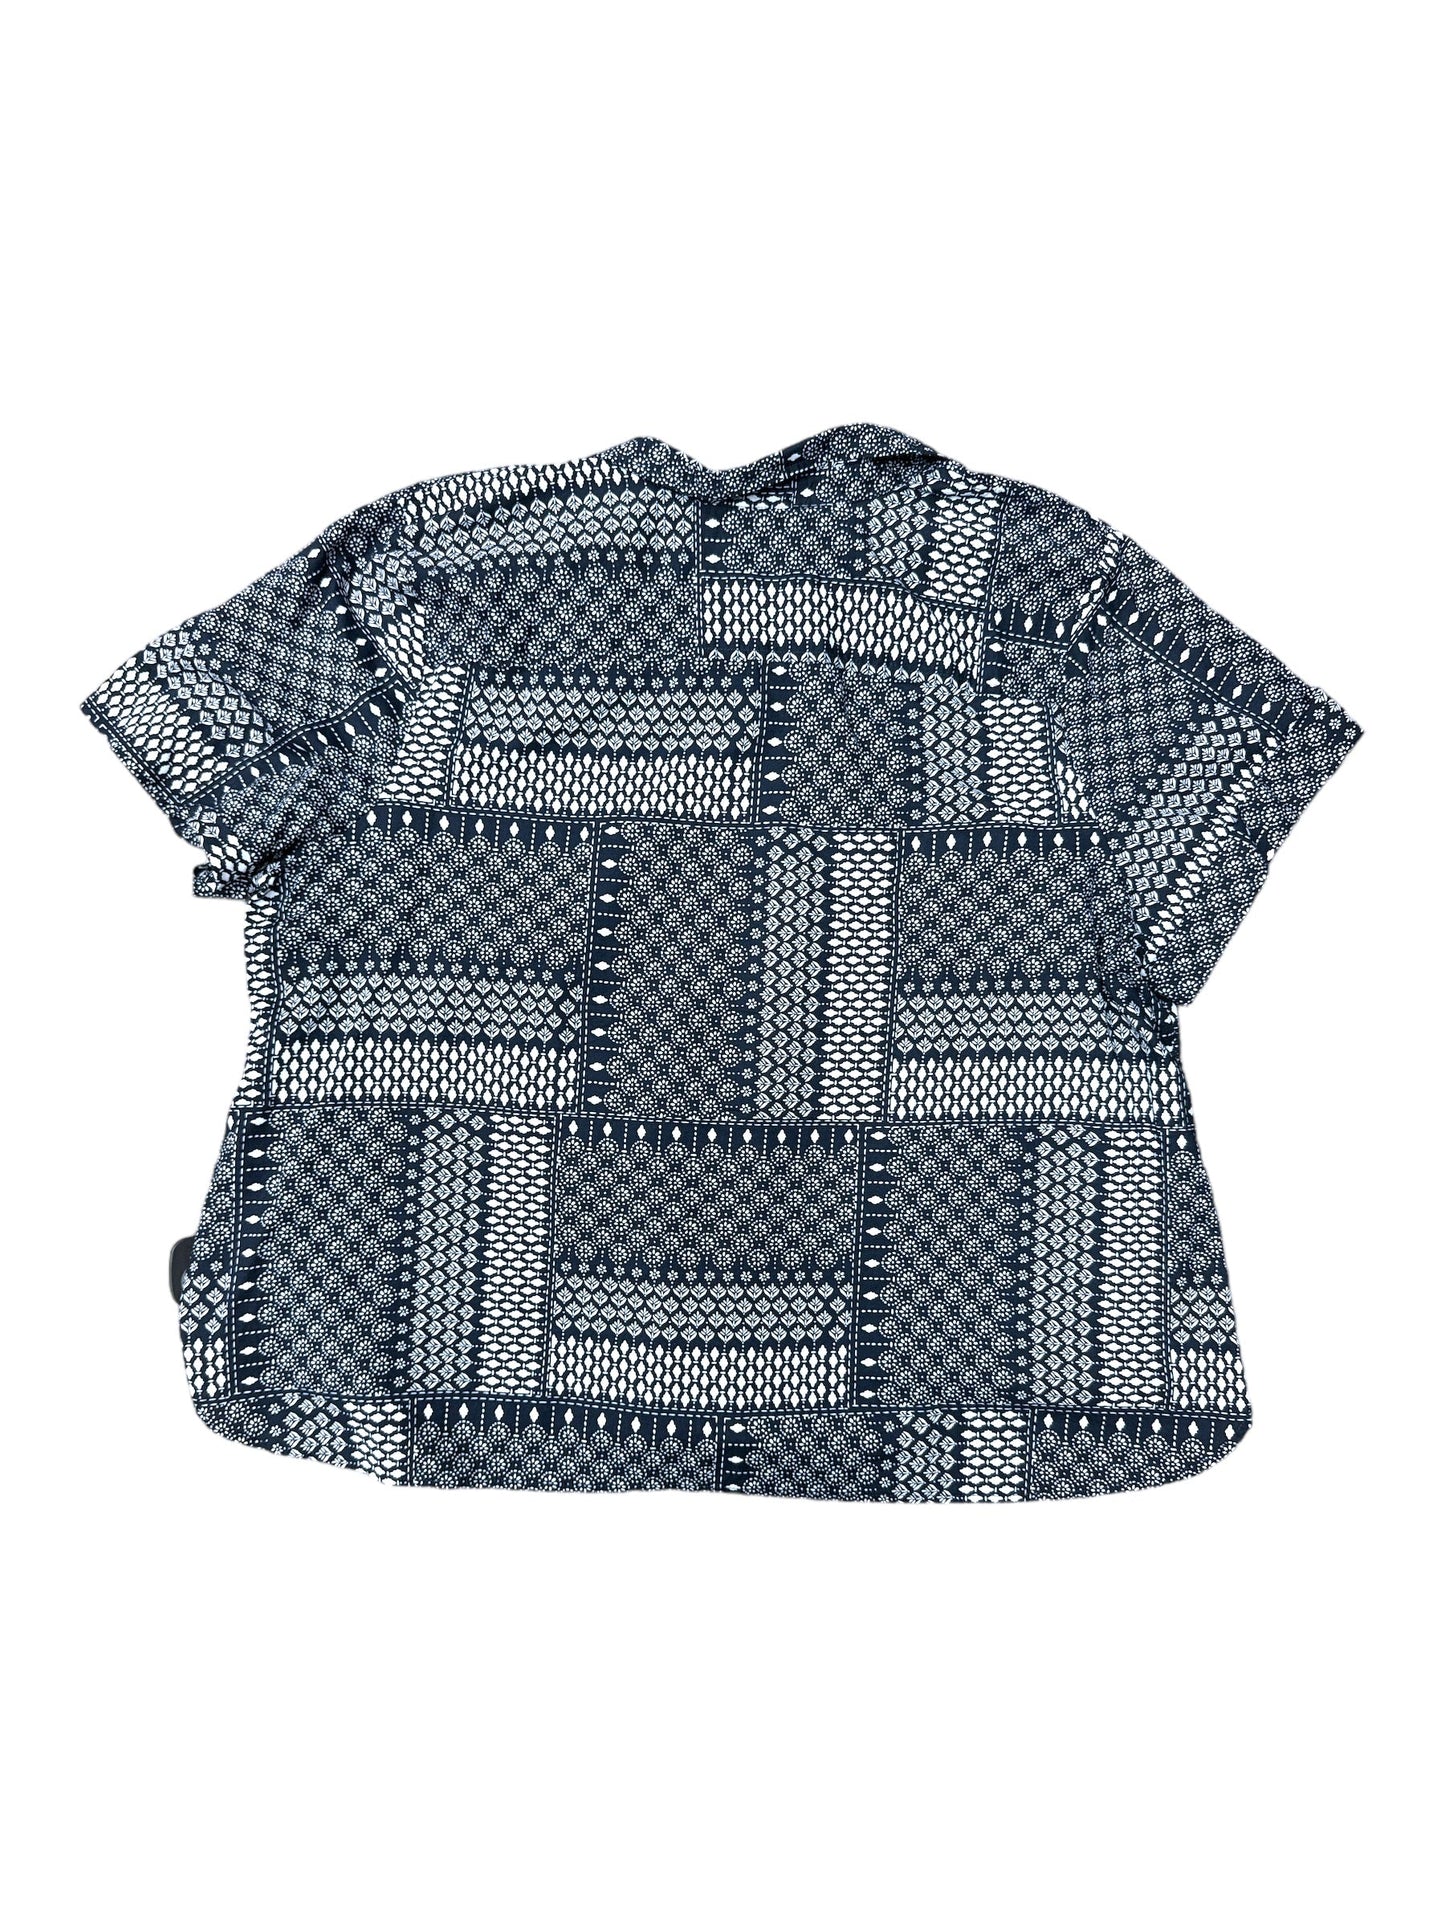 Navy Blouse Short Sleeve Tommy Hilfiger, Size 2x